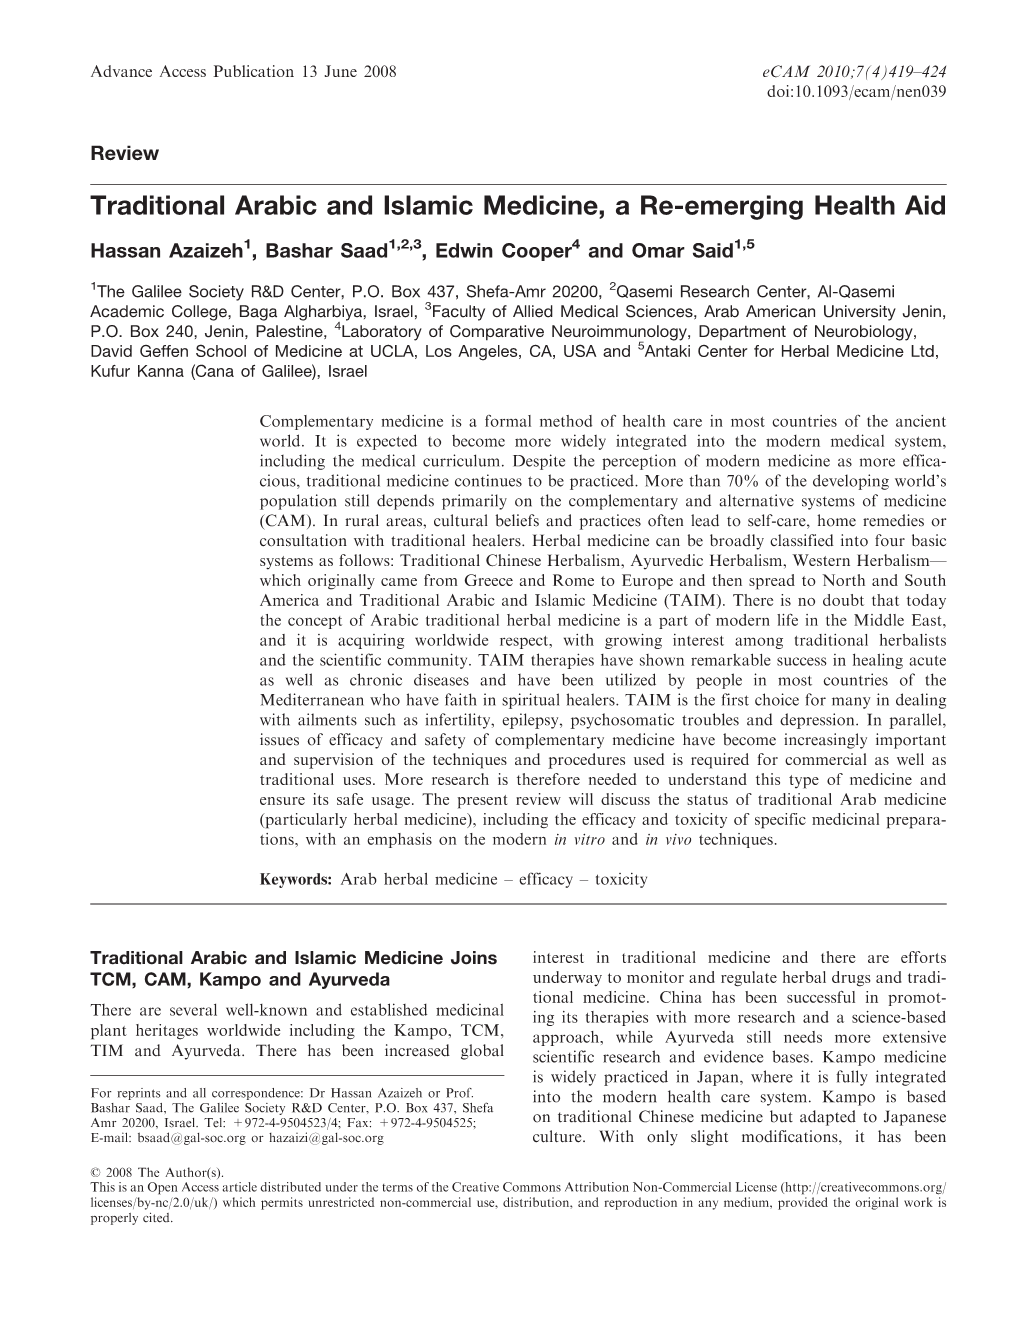 Traditional Arabic and Islamic Medicine, a Re-Emerging Health Aid